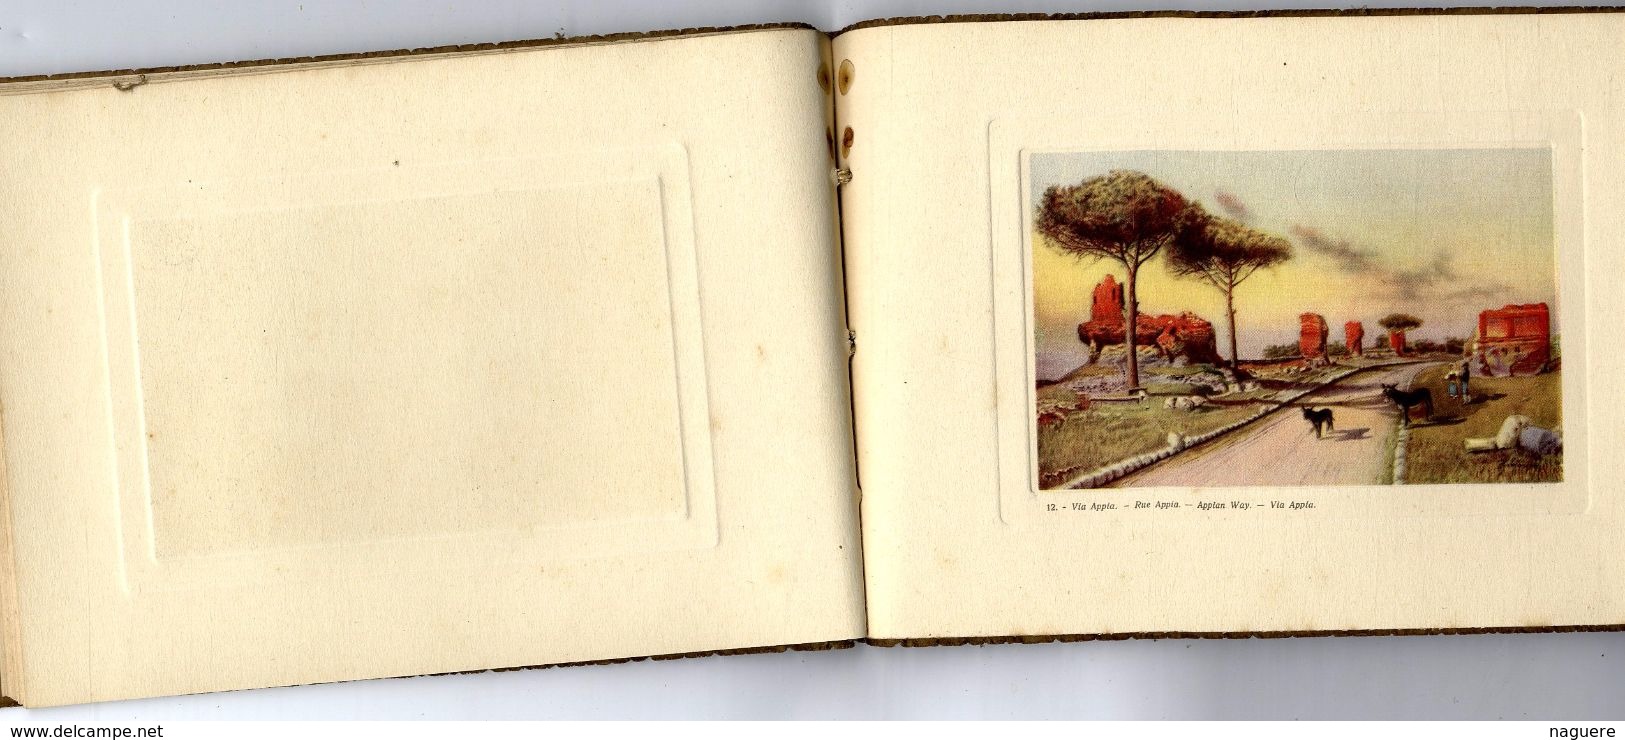 RICORDO DI ROMA  -  20 VEDATE ARTISTICHE  -  TRES BELLES GRAVURES COULEURS - Manuales Para Coleccionistas